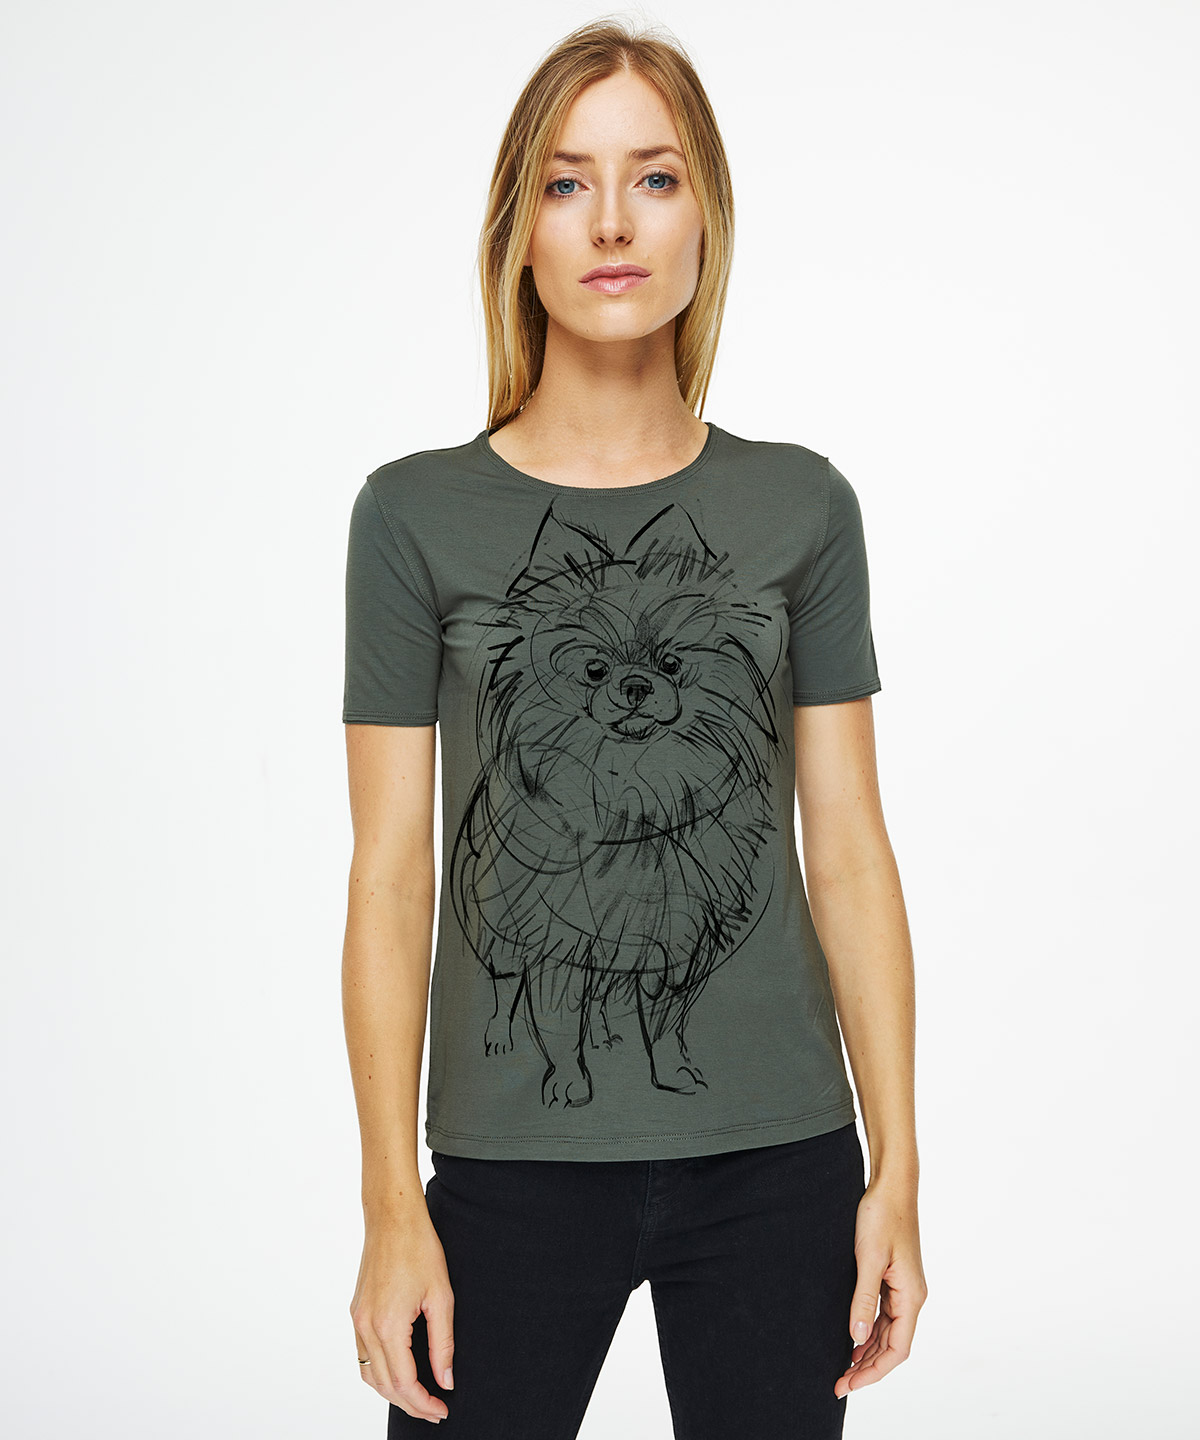 Pomeranian khaki t-shirt woman